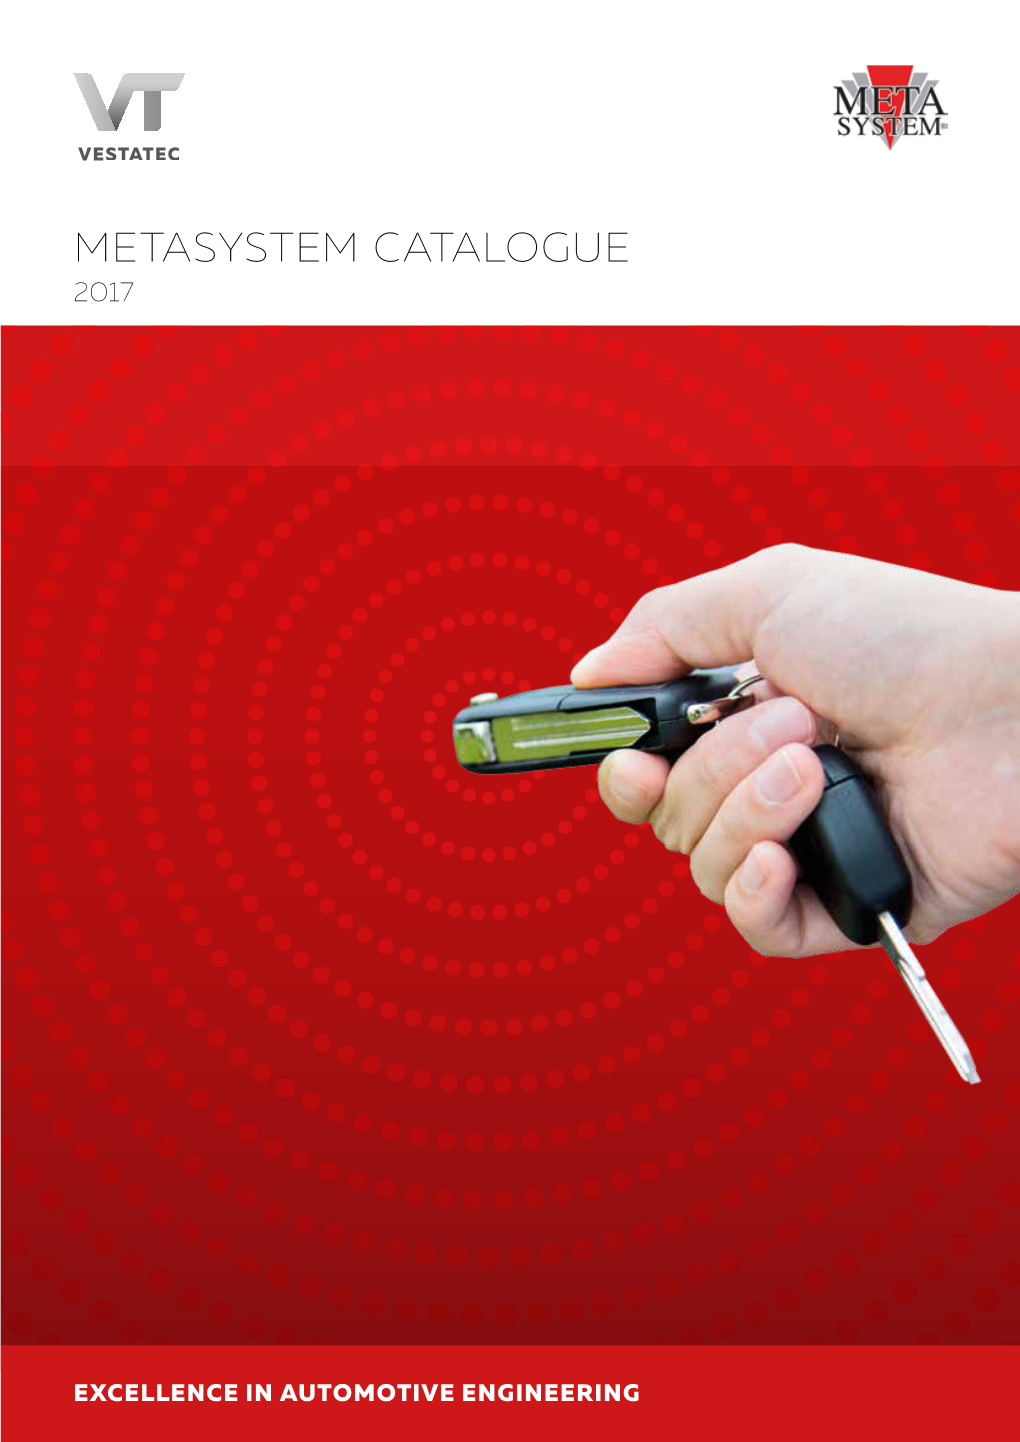 Metasystem Catalogue 2017